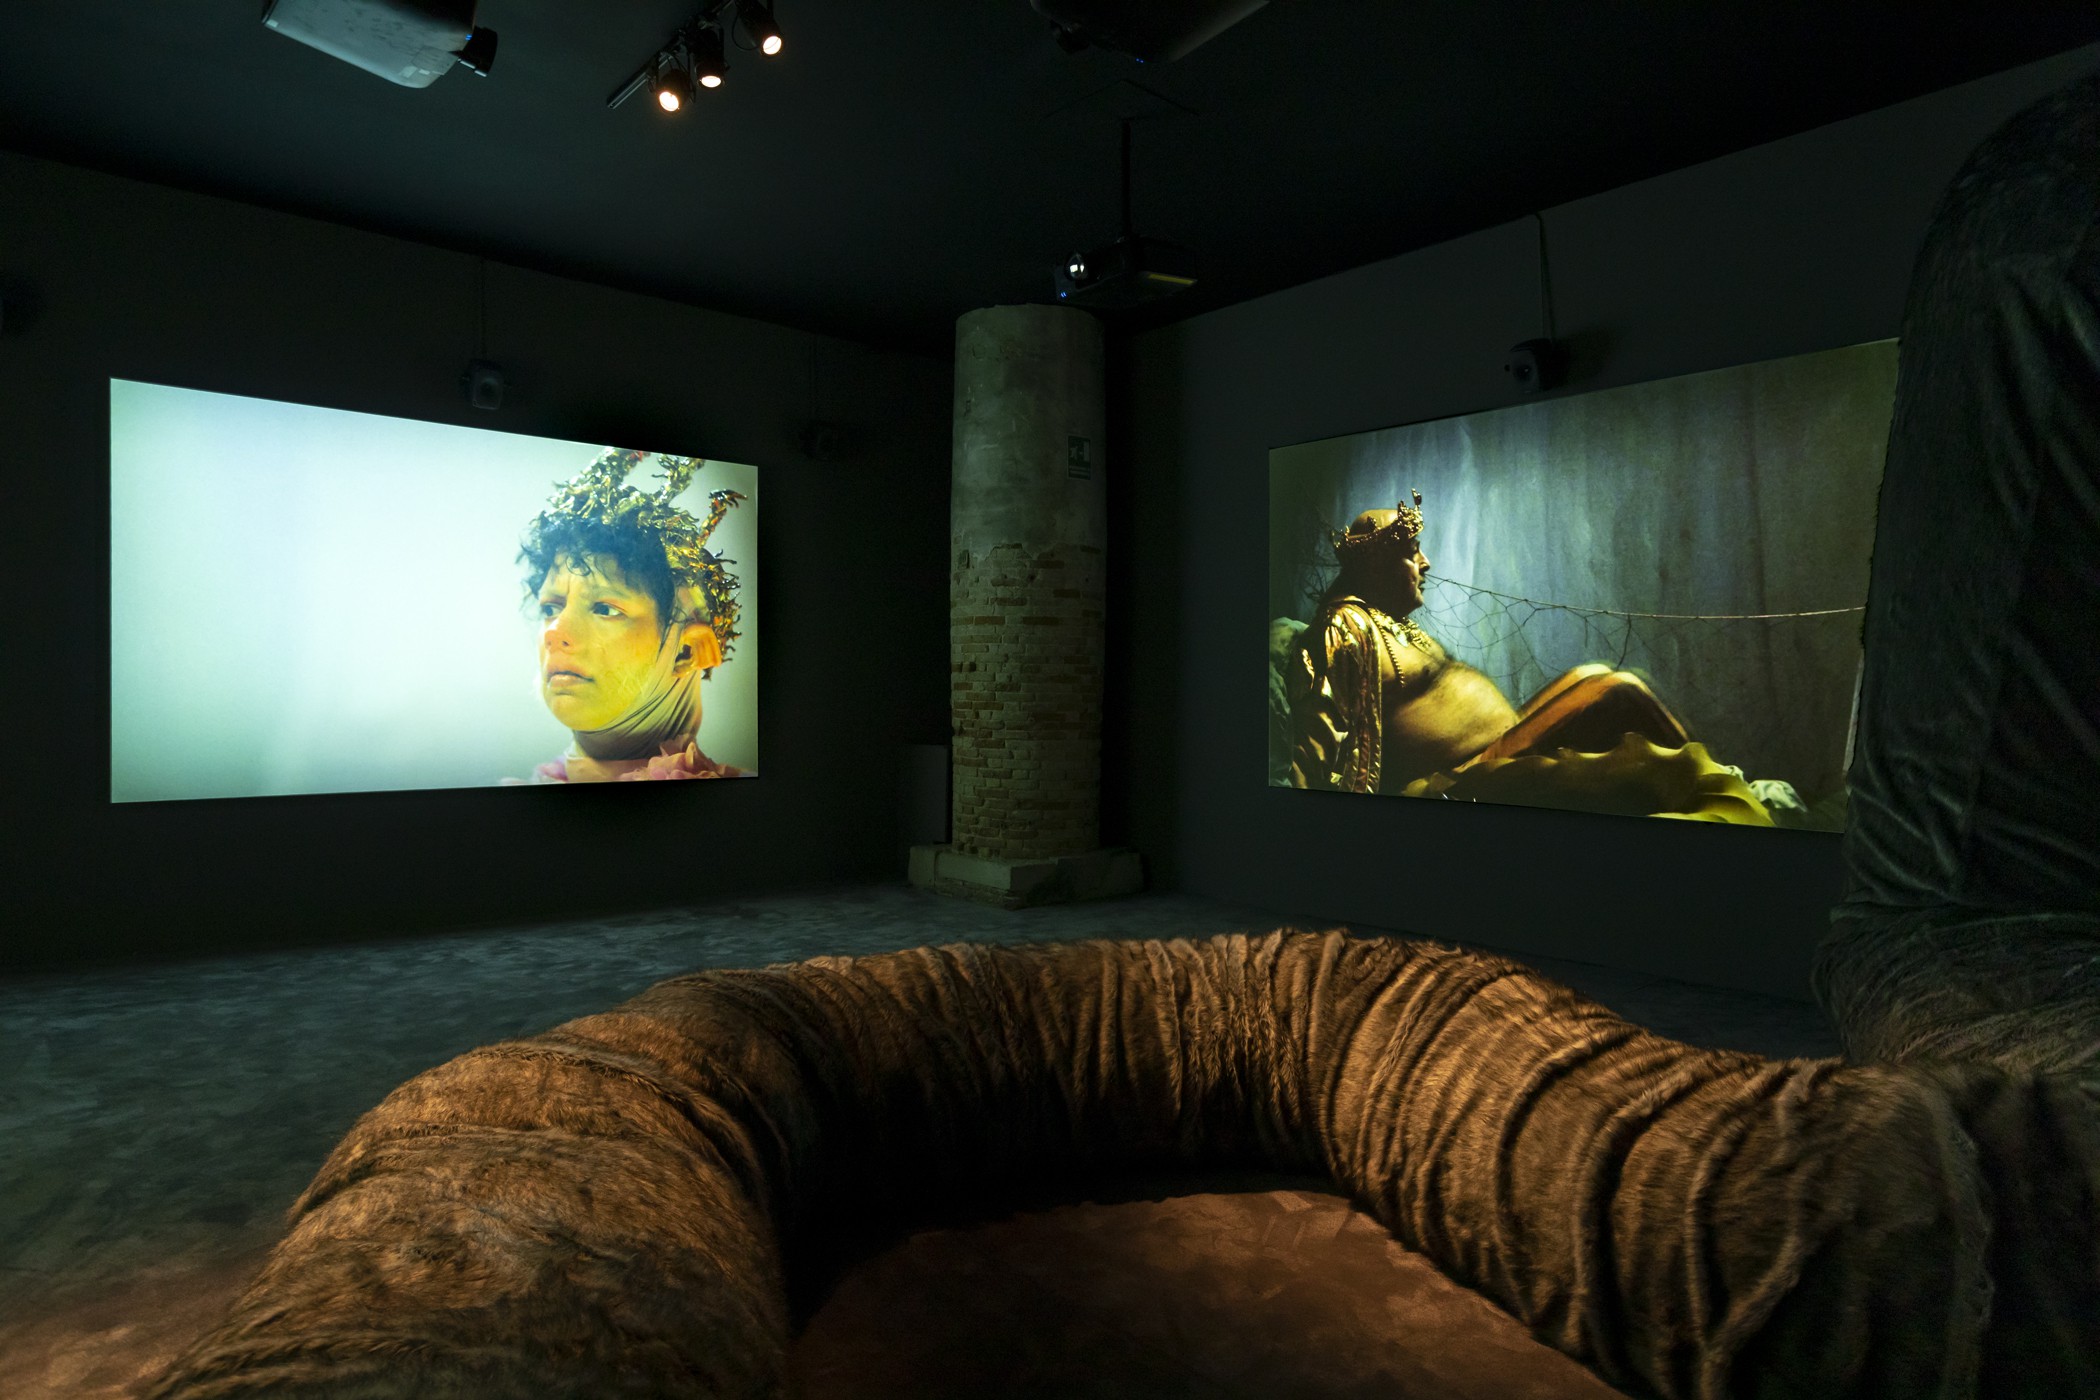 Installation view, The Severed Tail, 59th International Art Exhibition – La Biennale di Venezia, The Milk of Dreams, curated by Cecilia Alemani, 2022